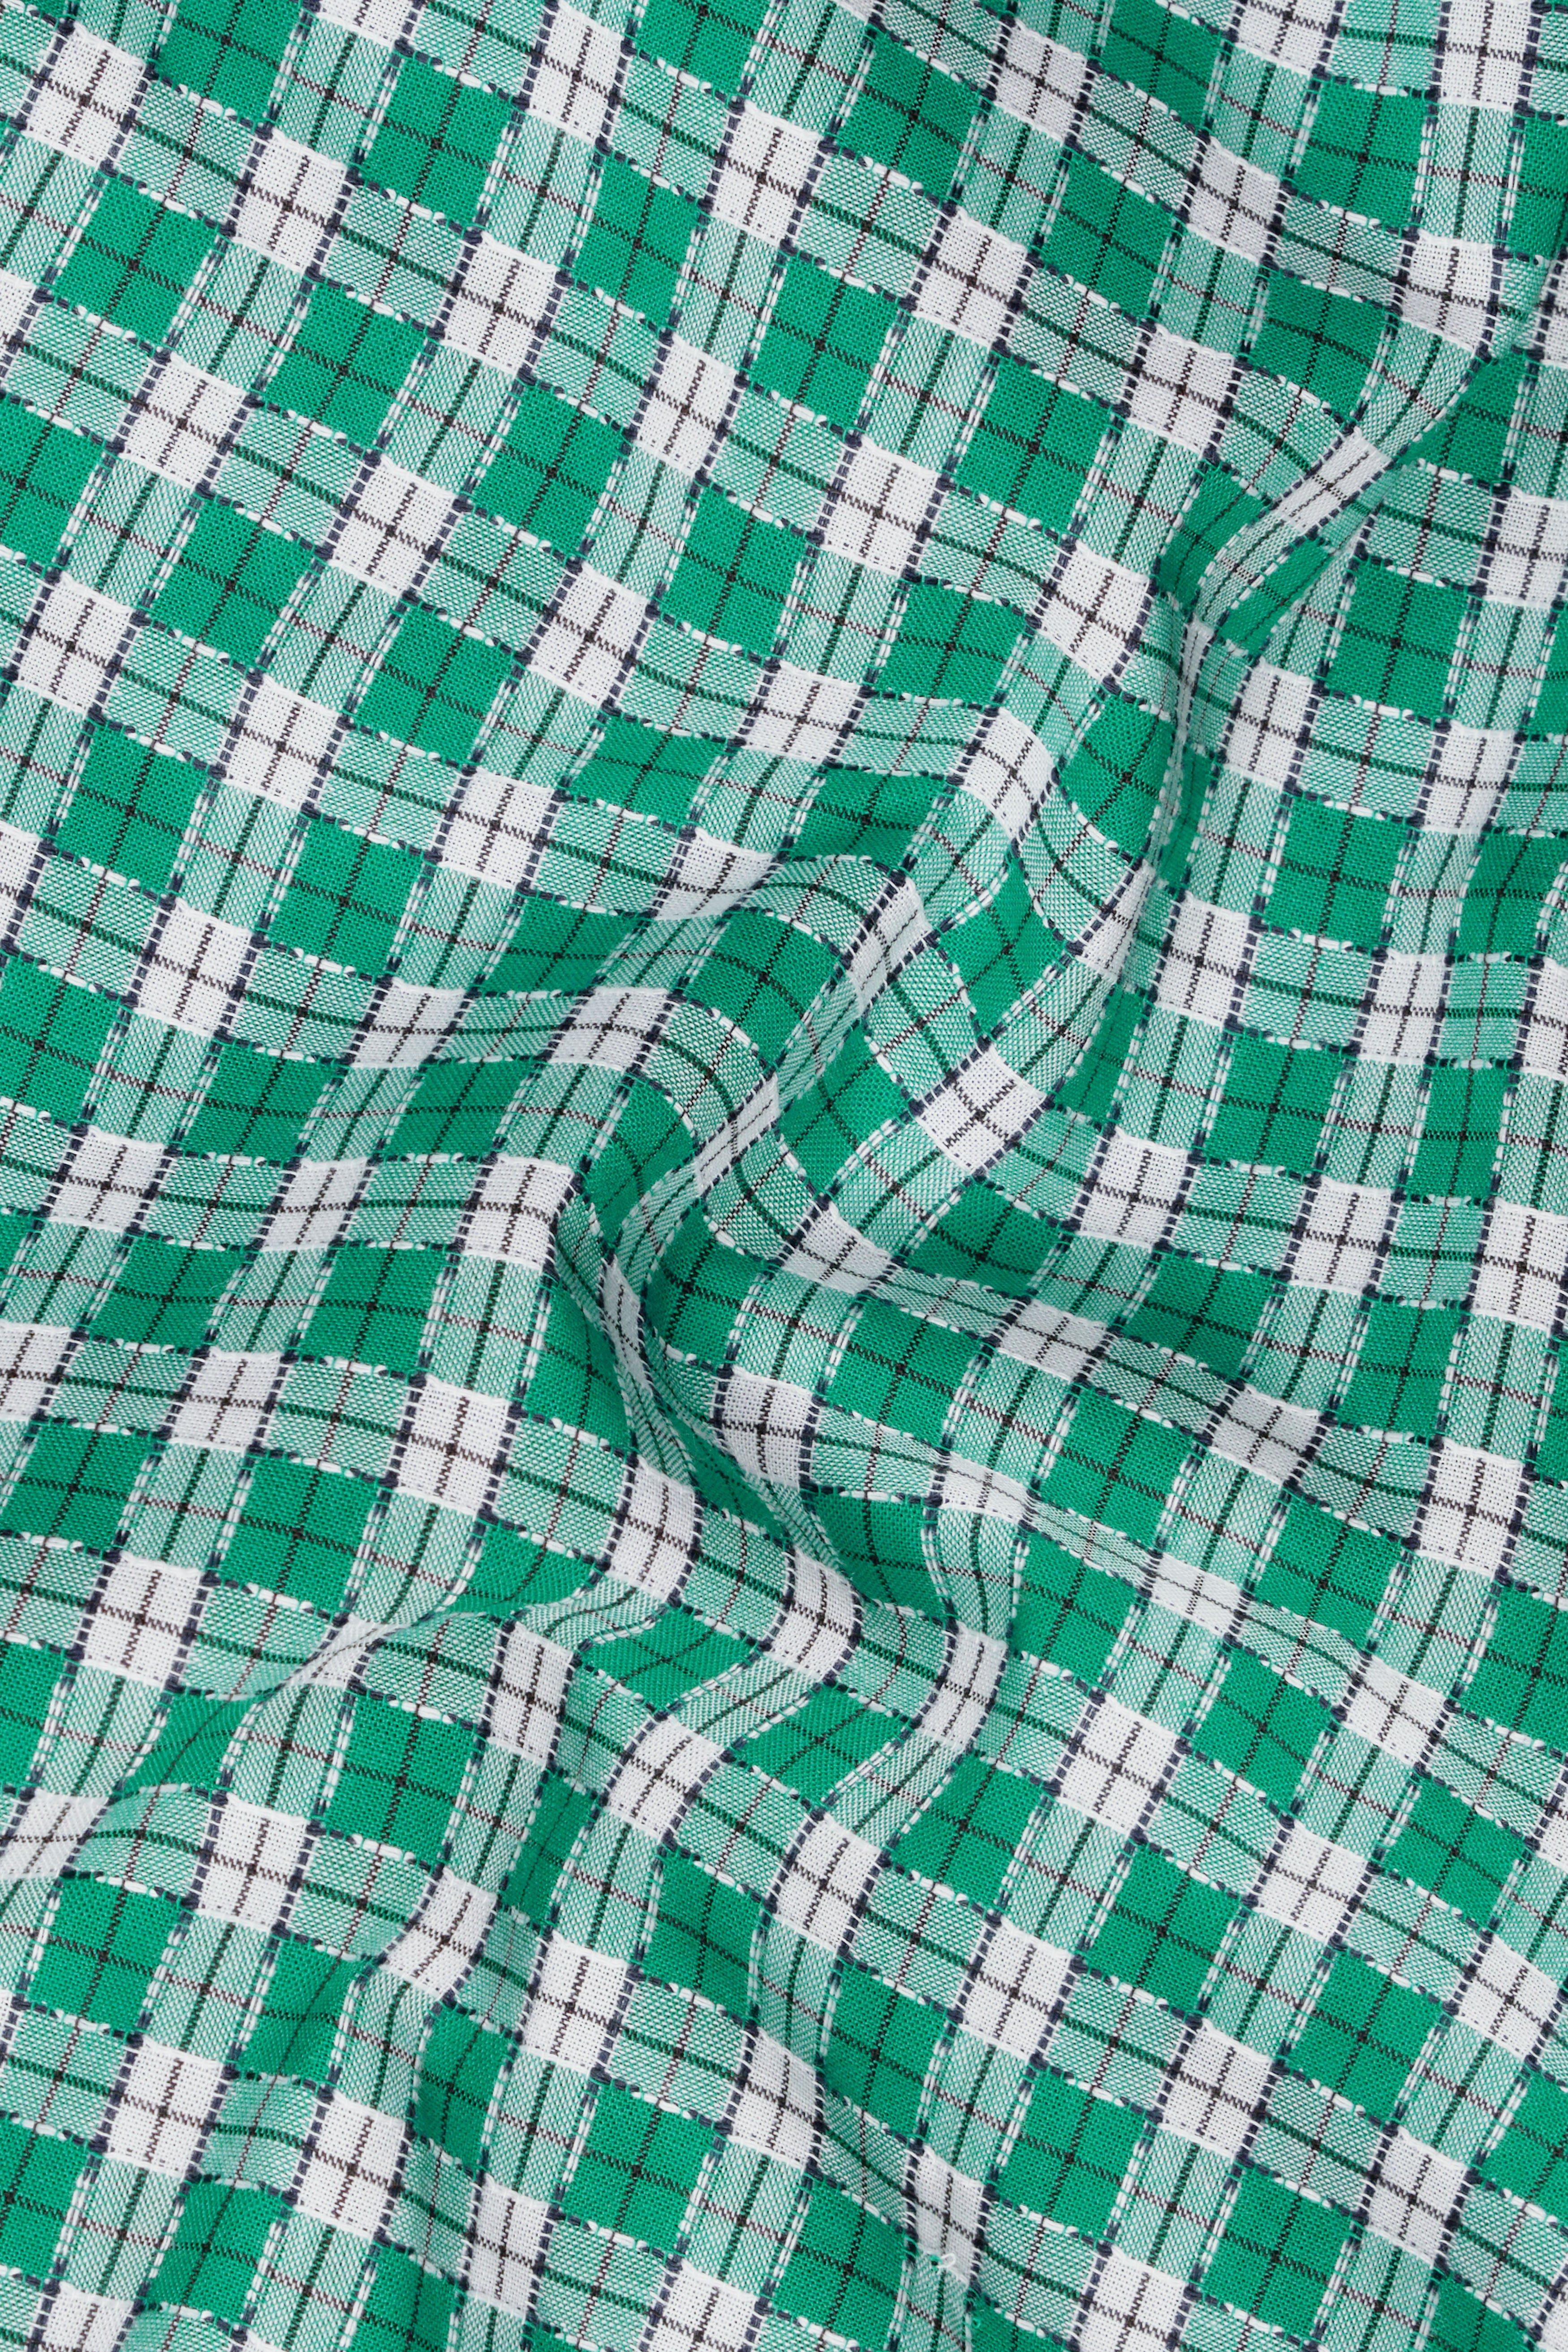 Gossamer Green and White Checkered Dobby Textured Premium Giza Cotton Shirt 10161-BD-38, 10161-BD-H-38, 10161-BD-39, 10161-BD-H-39, 10161-BD-40, 10161-BD-H-40, 10161-BD-42, 10161-BD-H-42, 10161-BD-44, 10161-BD-H-44, 10161-BD-46, 10161-BD-H-46, 10161-BD-48, 10161-BD-H-48, 10161-BD-50, 10161-BD-H-50, 10161-BD-52, 10161-BD-H-52